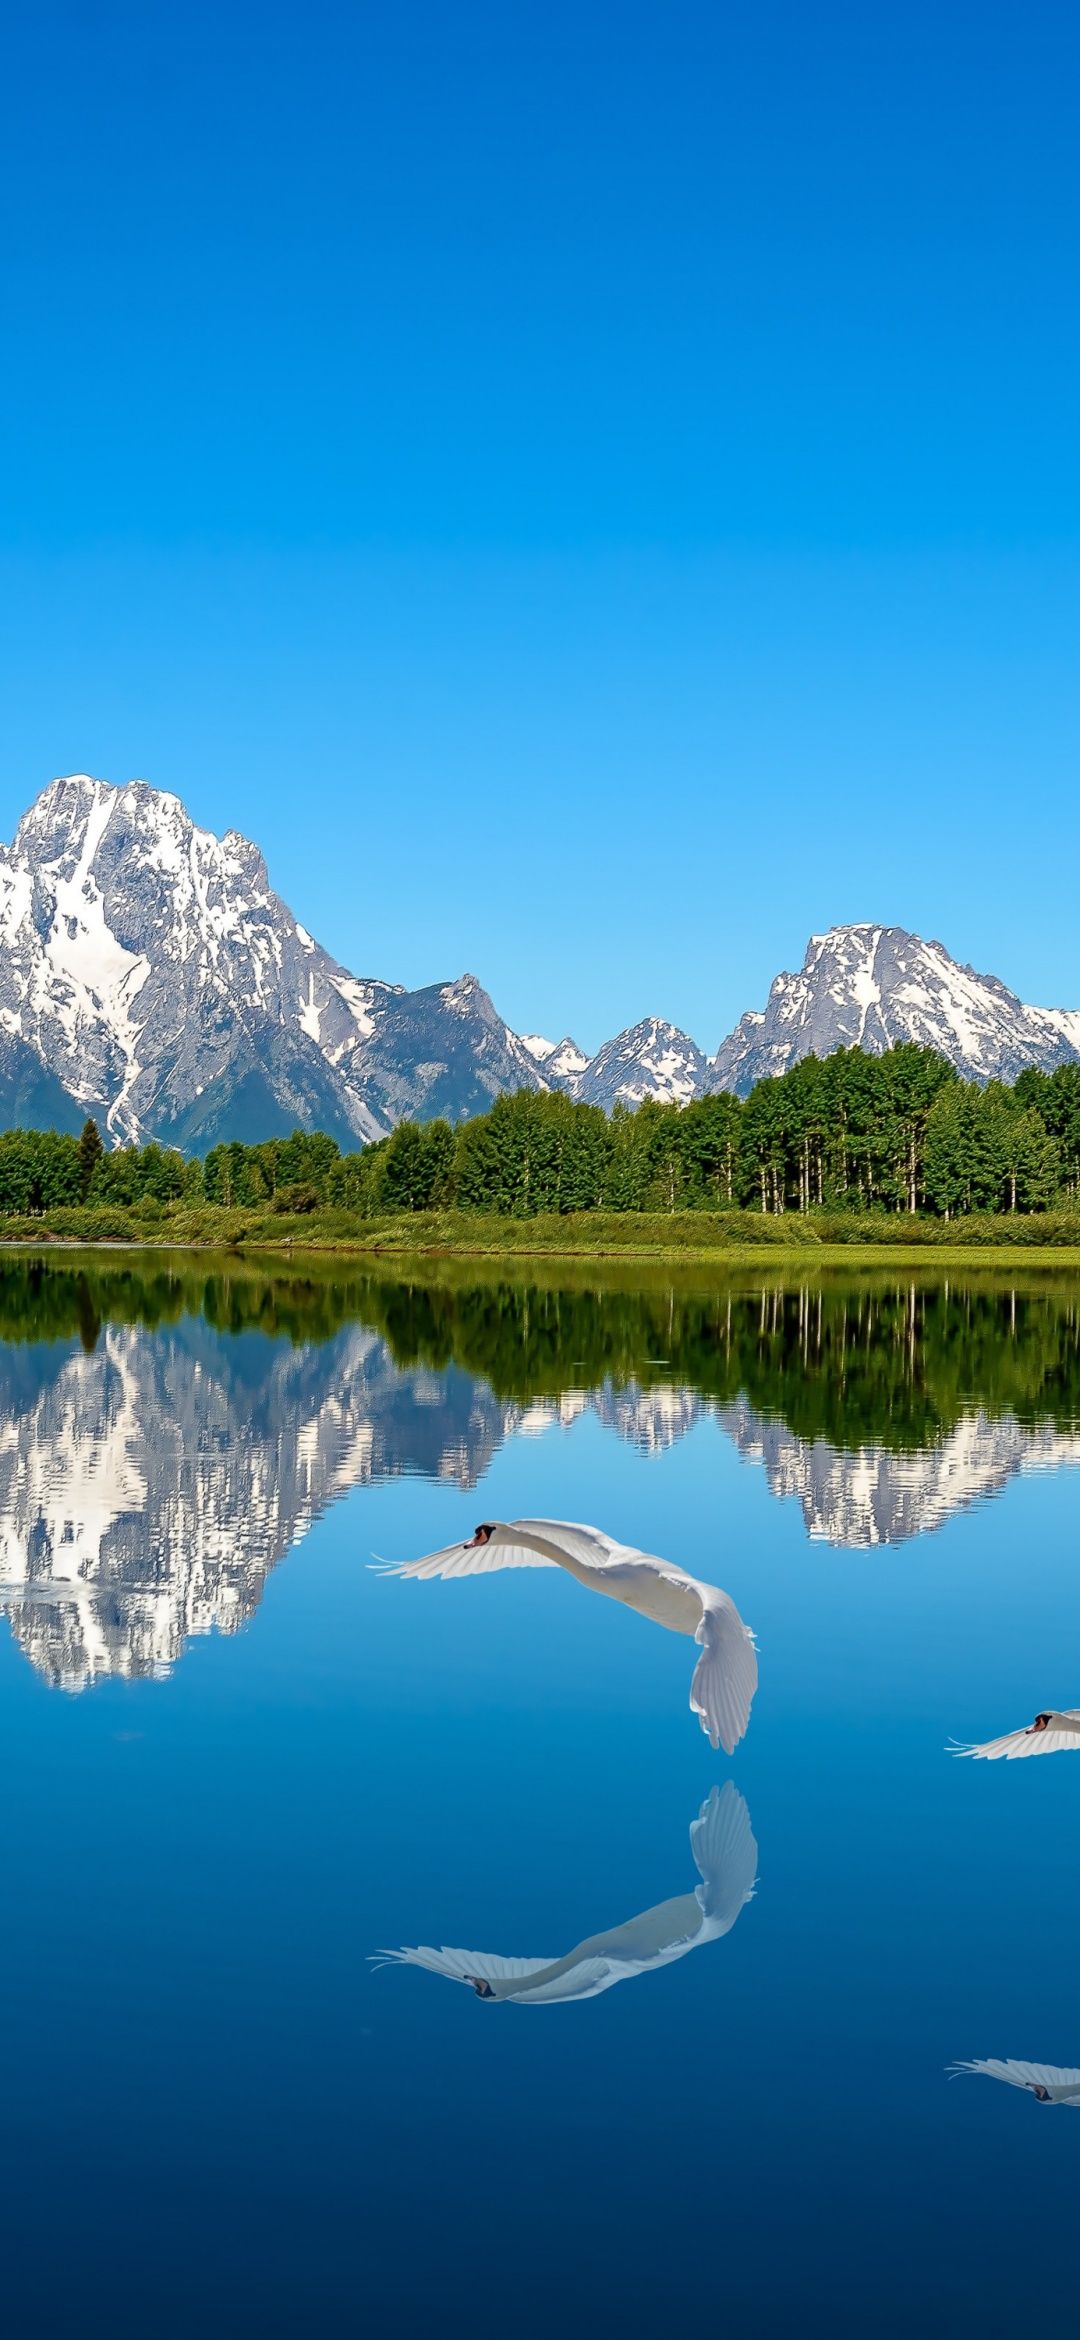  See Hintergrundbild 1080x2340. Lake Wallpaper 4K, Blue aesthetic, Mountains